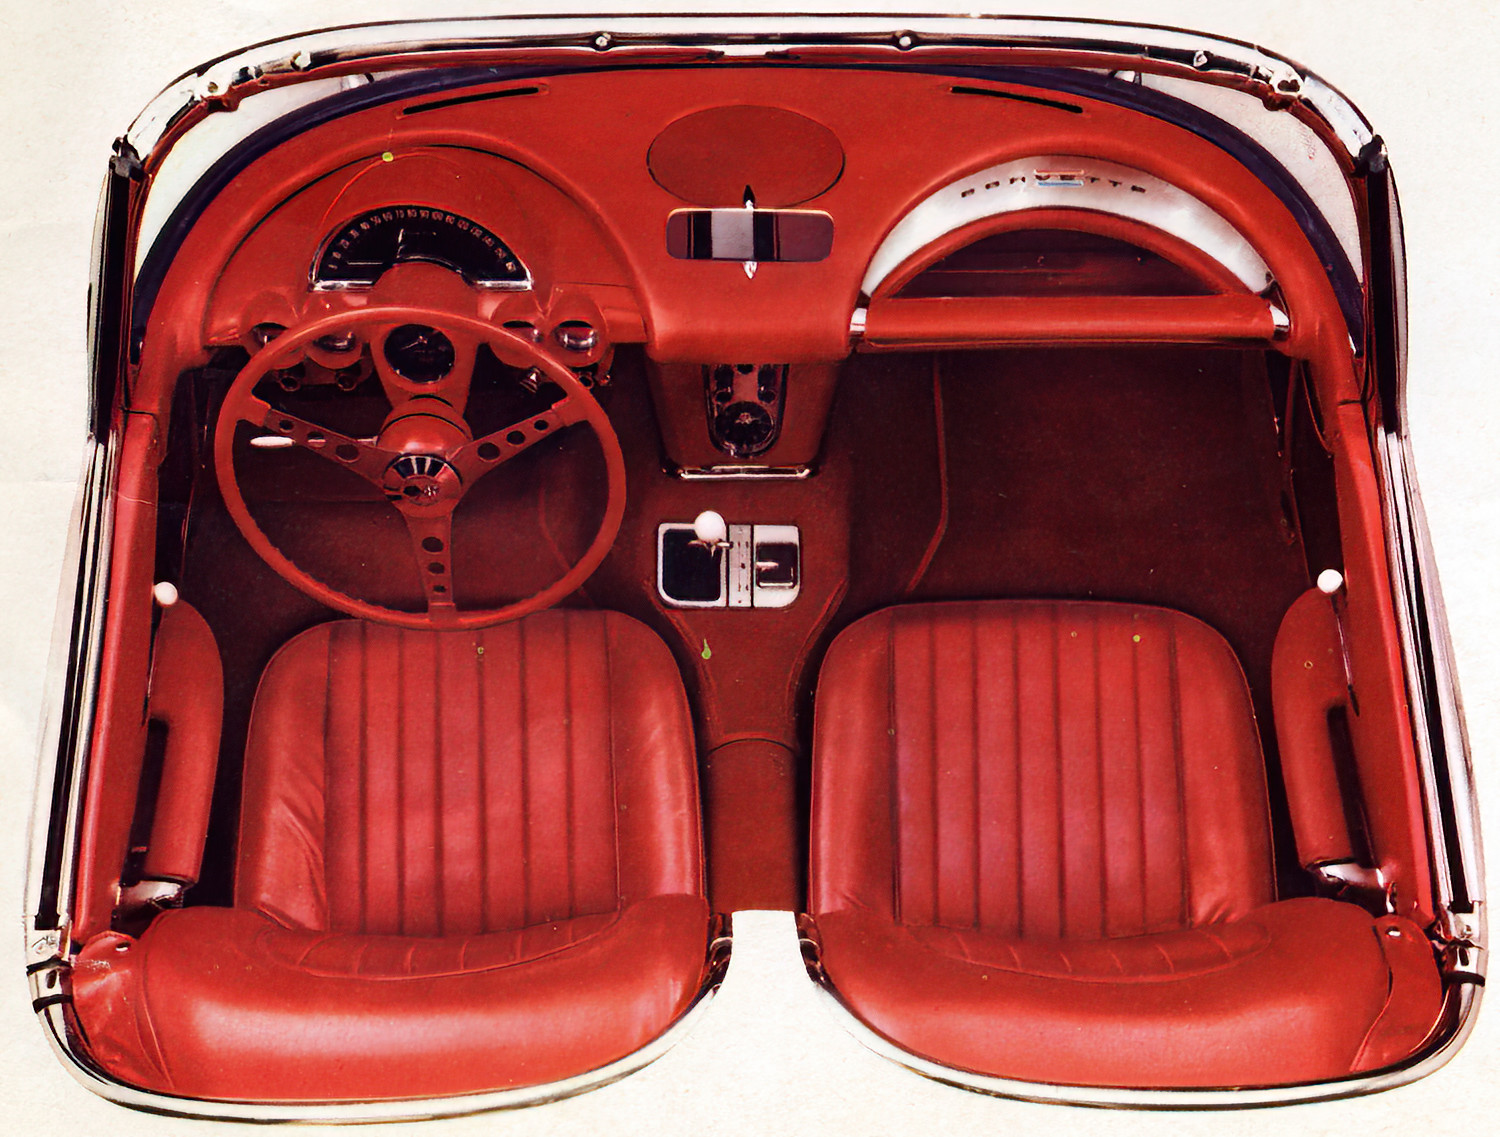 1960 Corvette seats